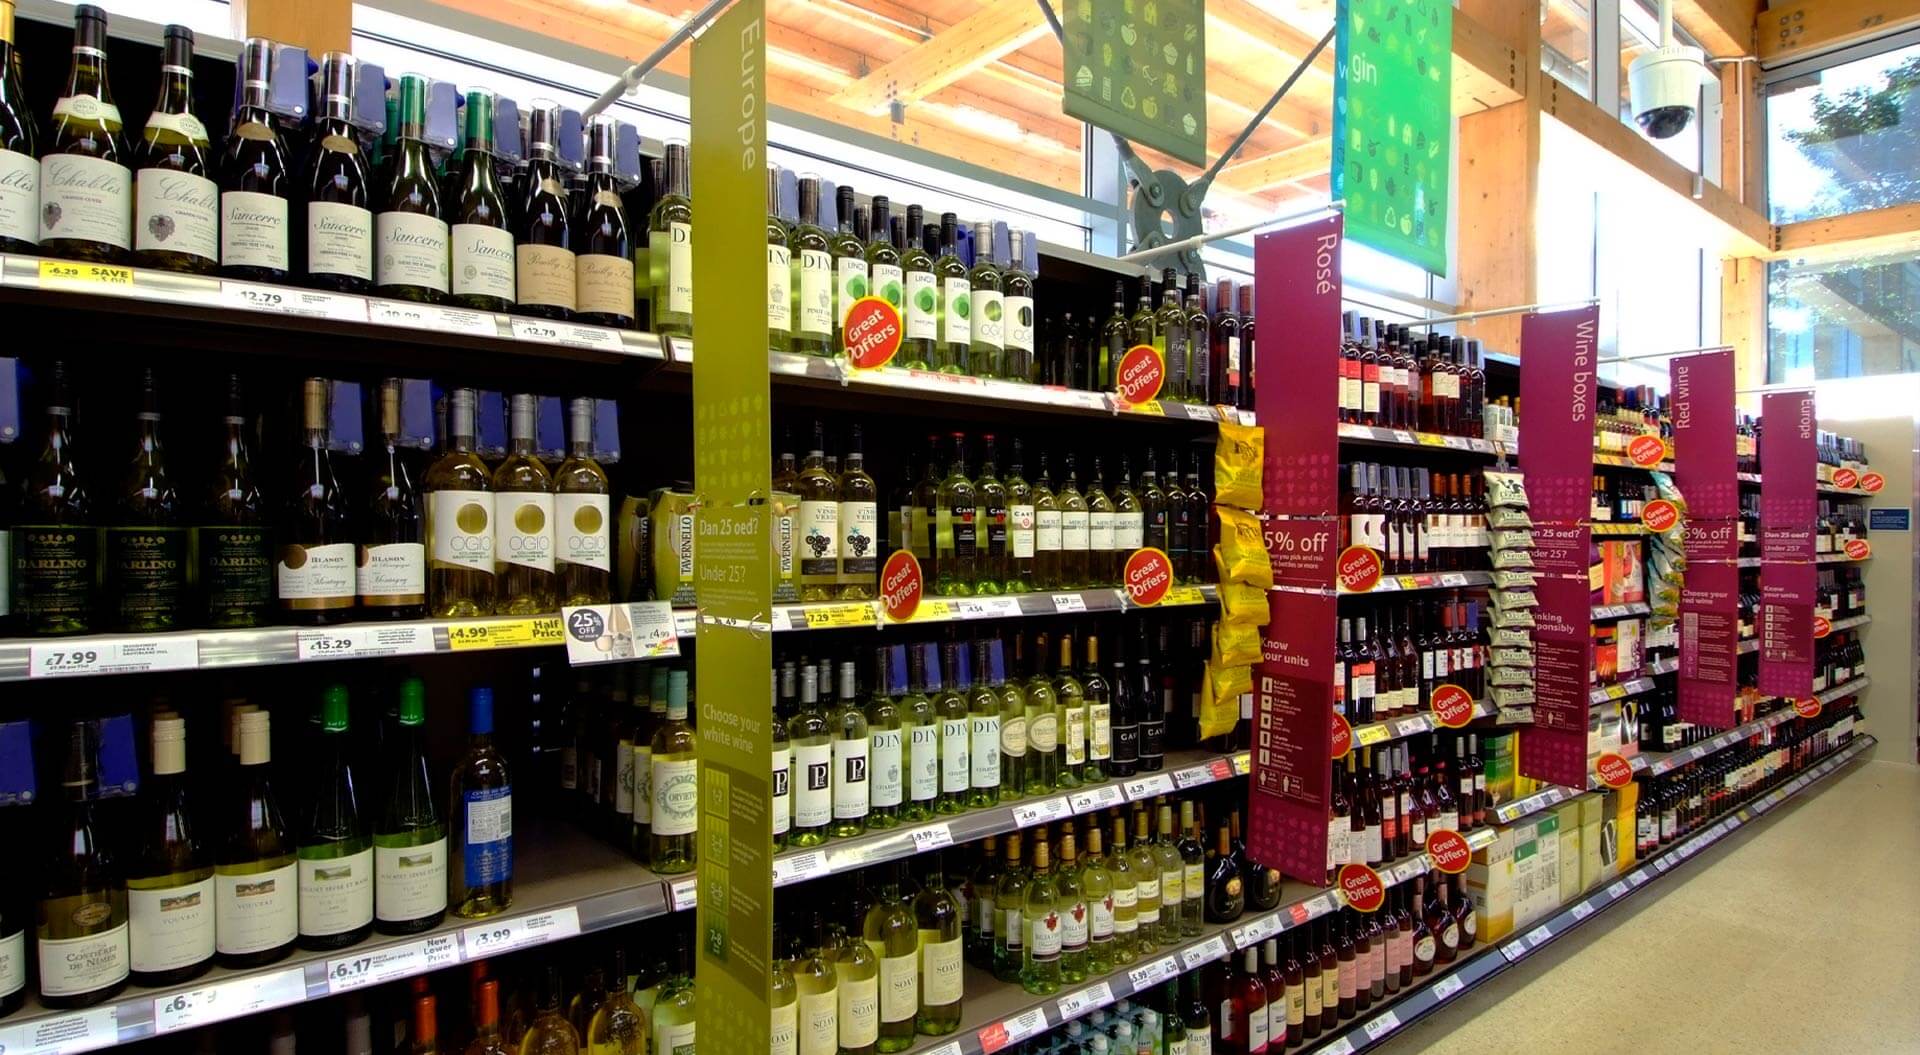 Tesco supermarket welshpool wine shop, merchandising system and brand communications 